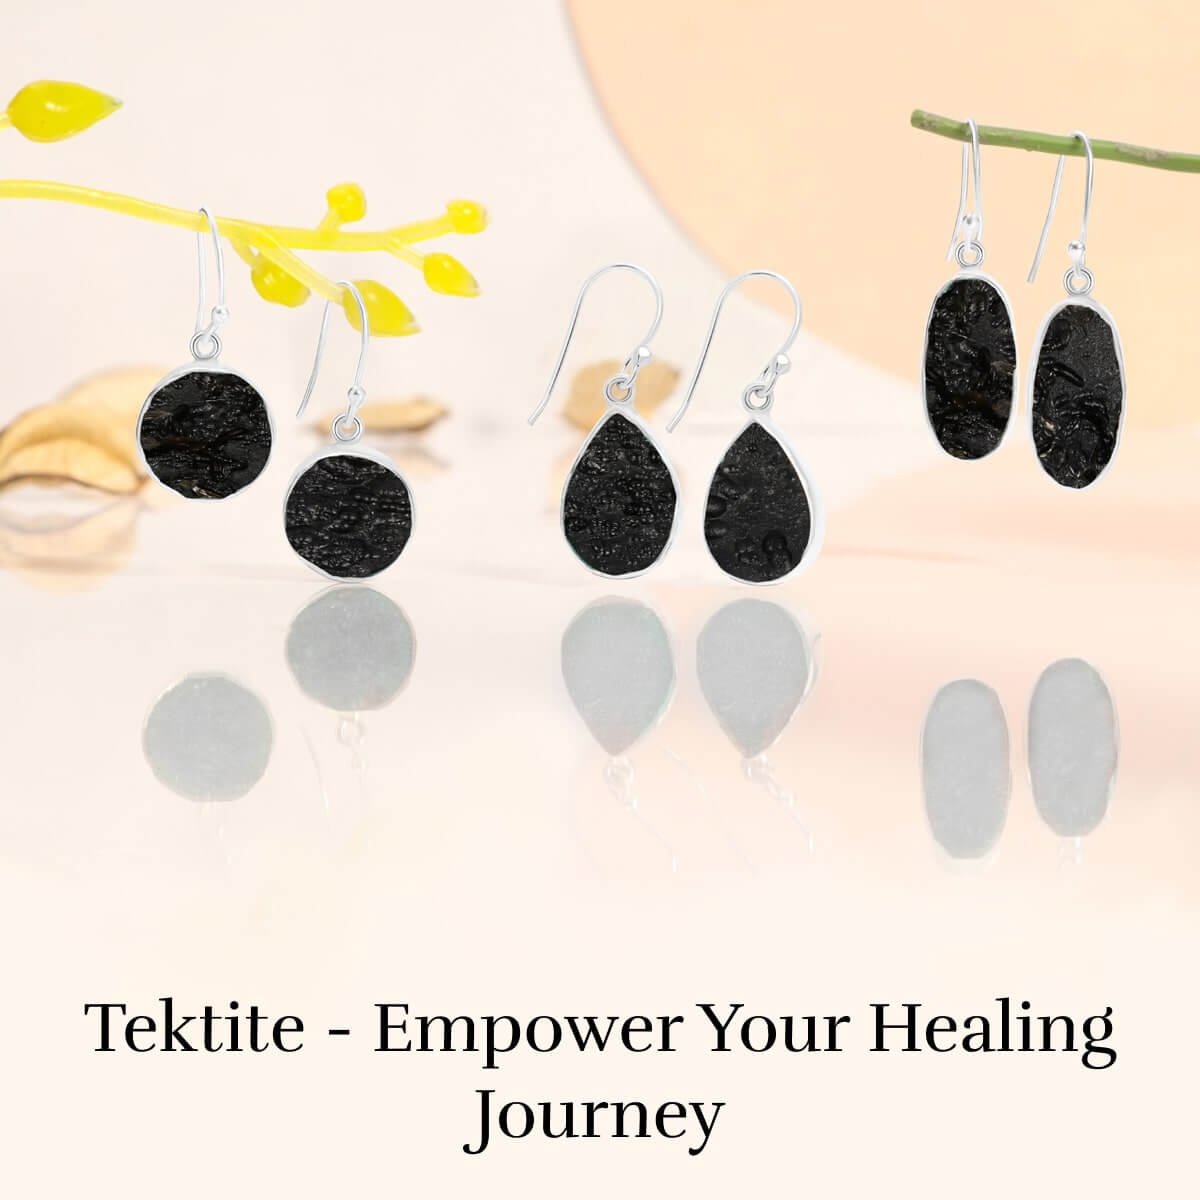 Healing properties of Tektite gemstone